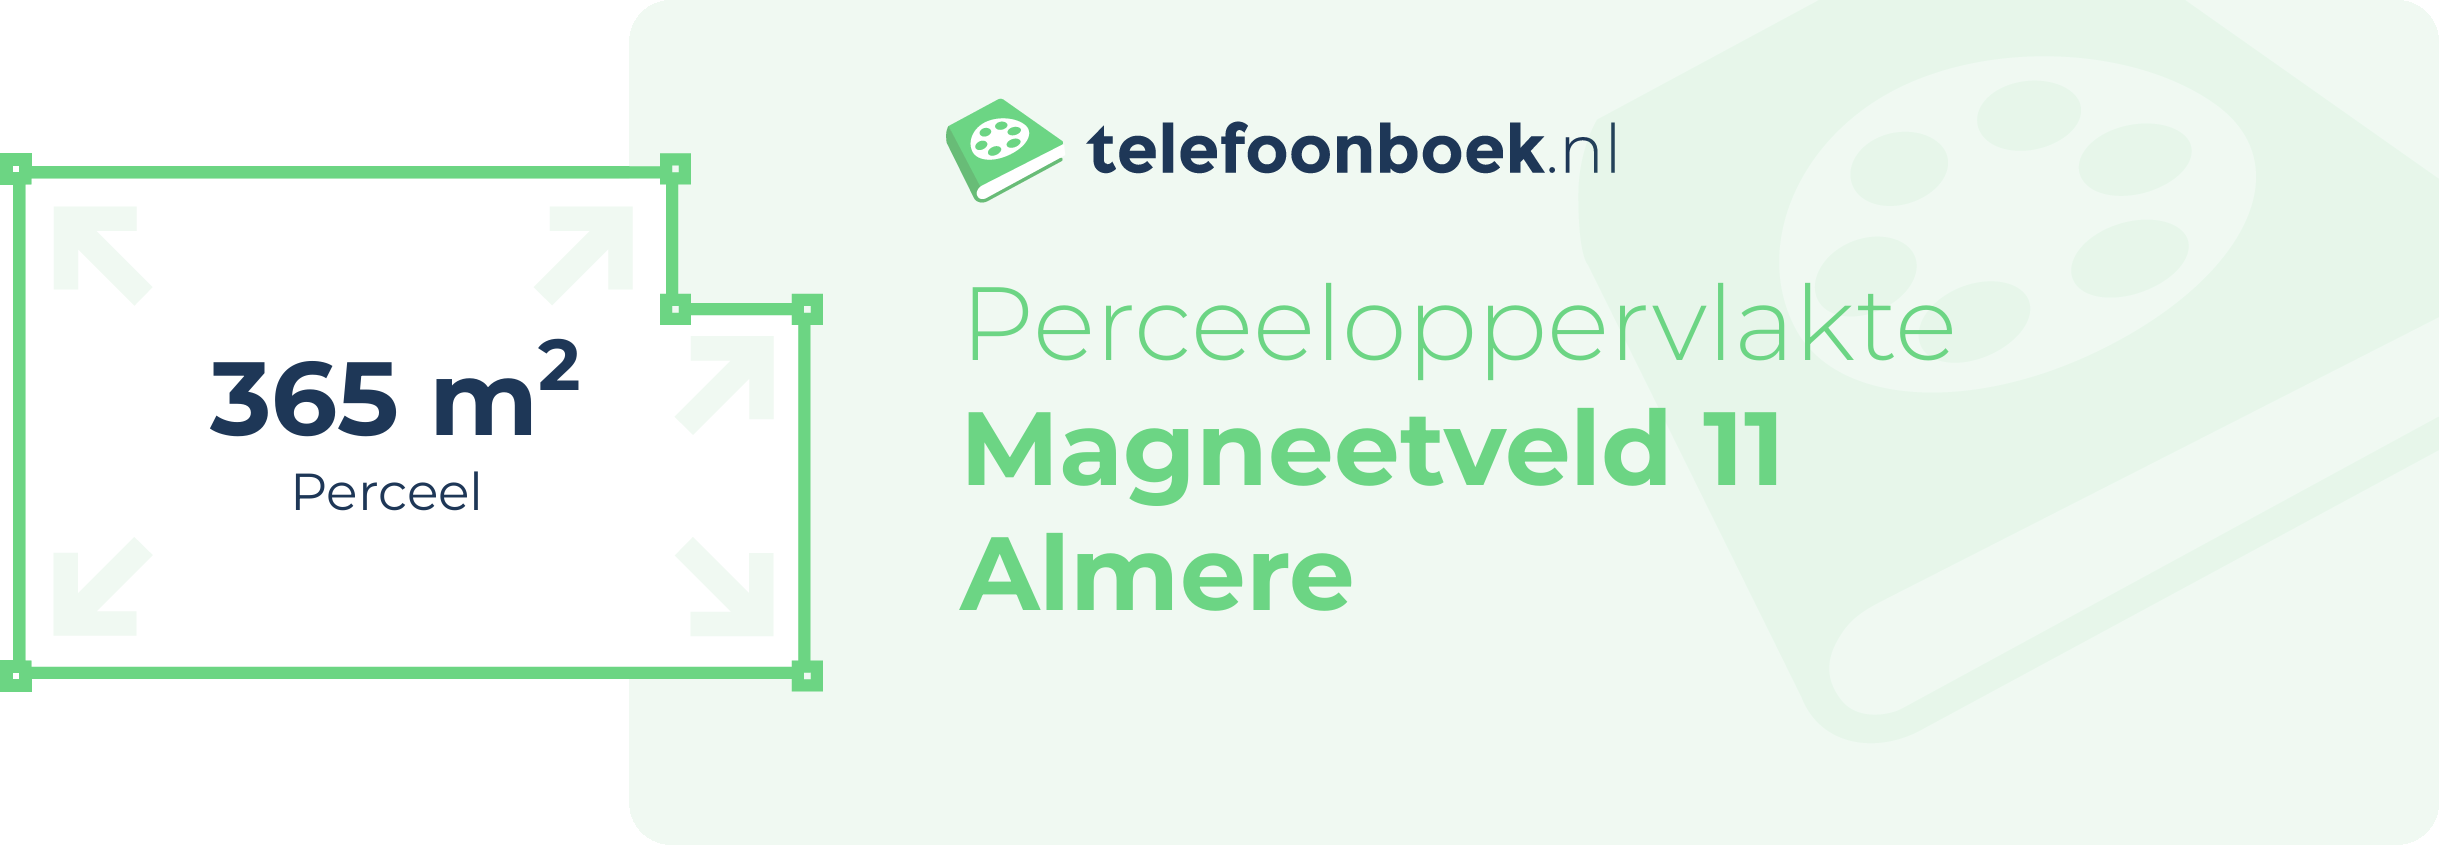 Perceeloppervlakte Magneetveld 11 Almere